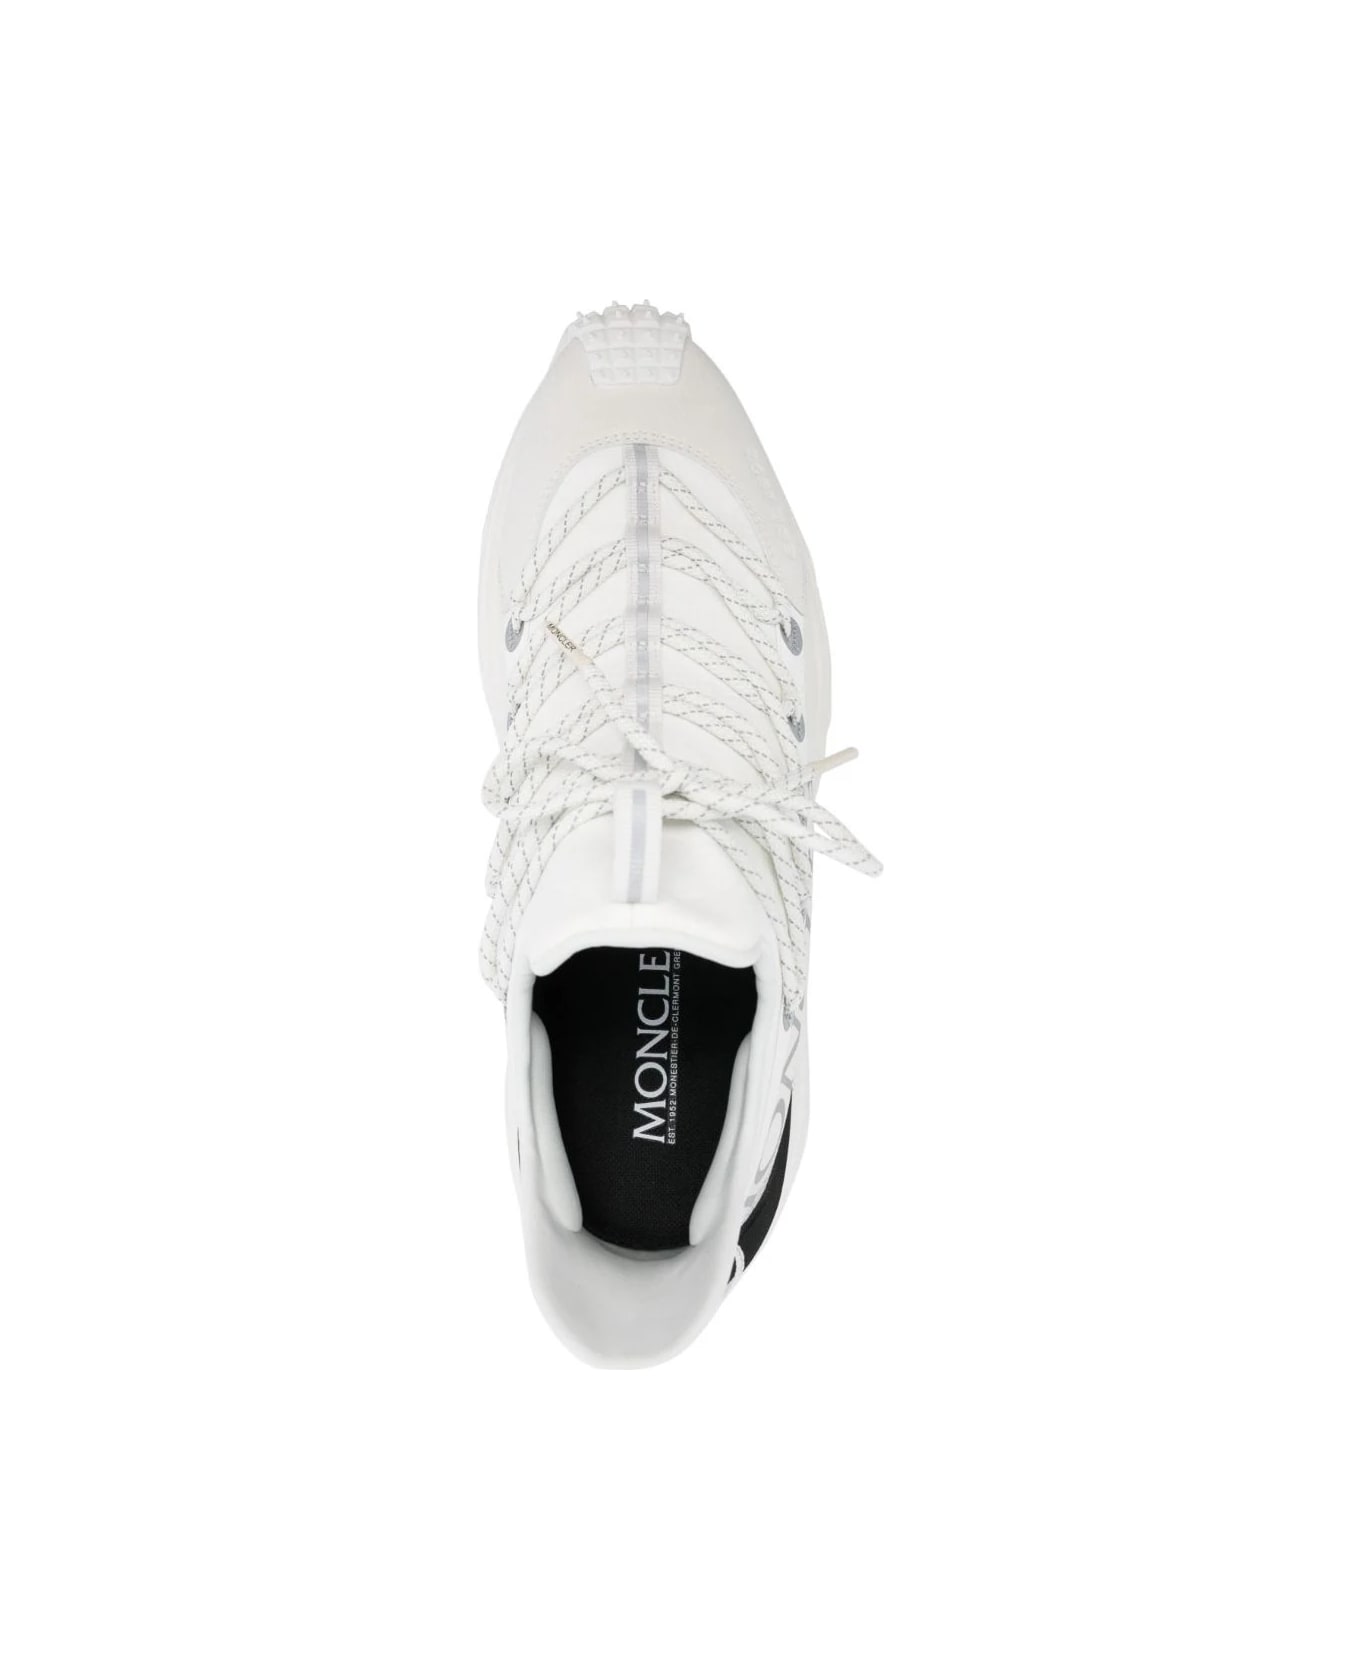 Moncler White Trailgrip Lite 2 Sneakers - White